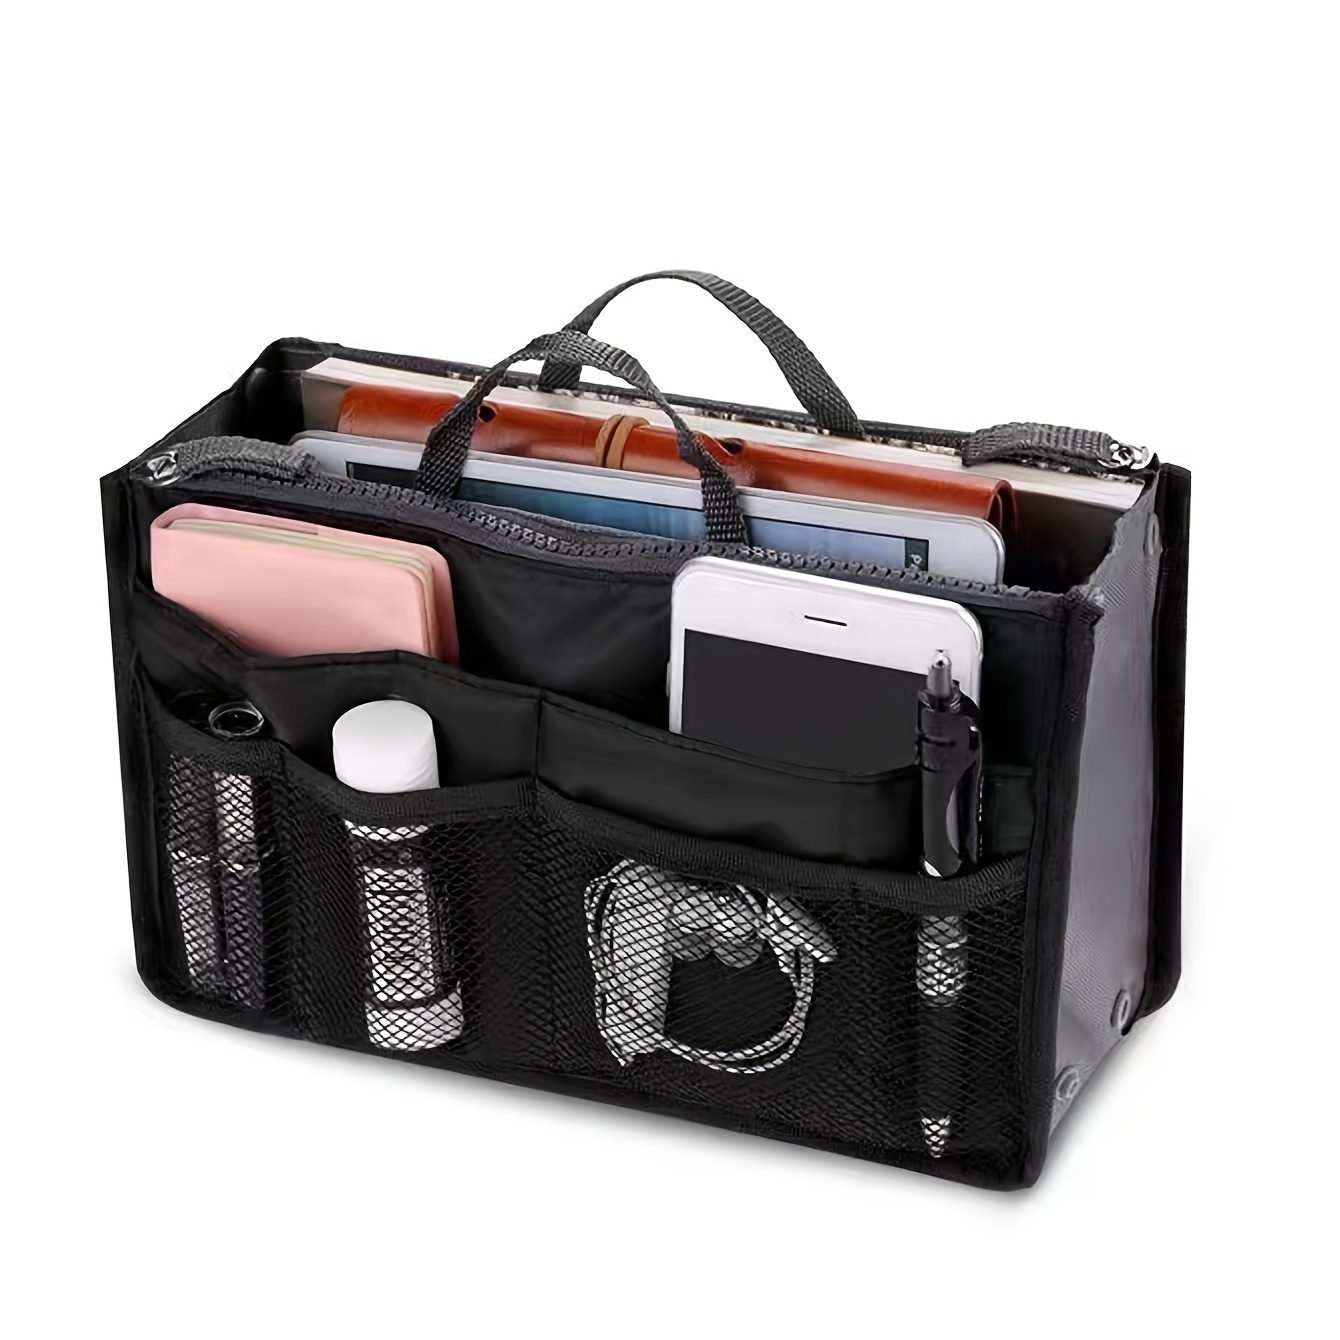 Felt Insert Bag Makeup Handbag Organizer Travel Inner Purse Women's  Portable Cosmetic Bags Storage Tote Fit For Speedy 25 30 35